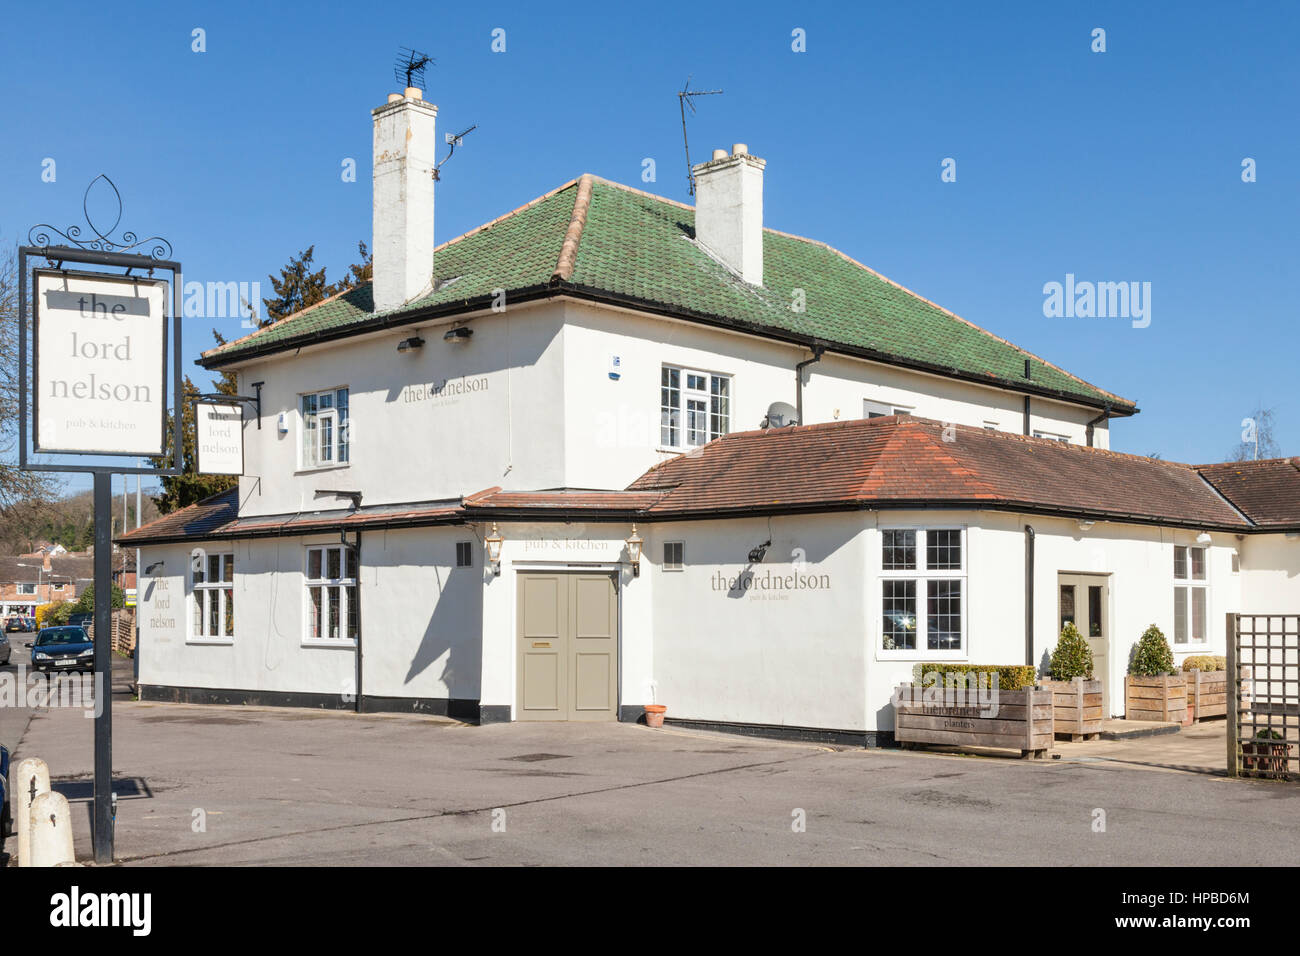 The Lord Nelson pub in Burton Joyce, Nottinghamshire, England, UK Stock Photo